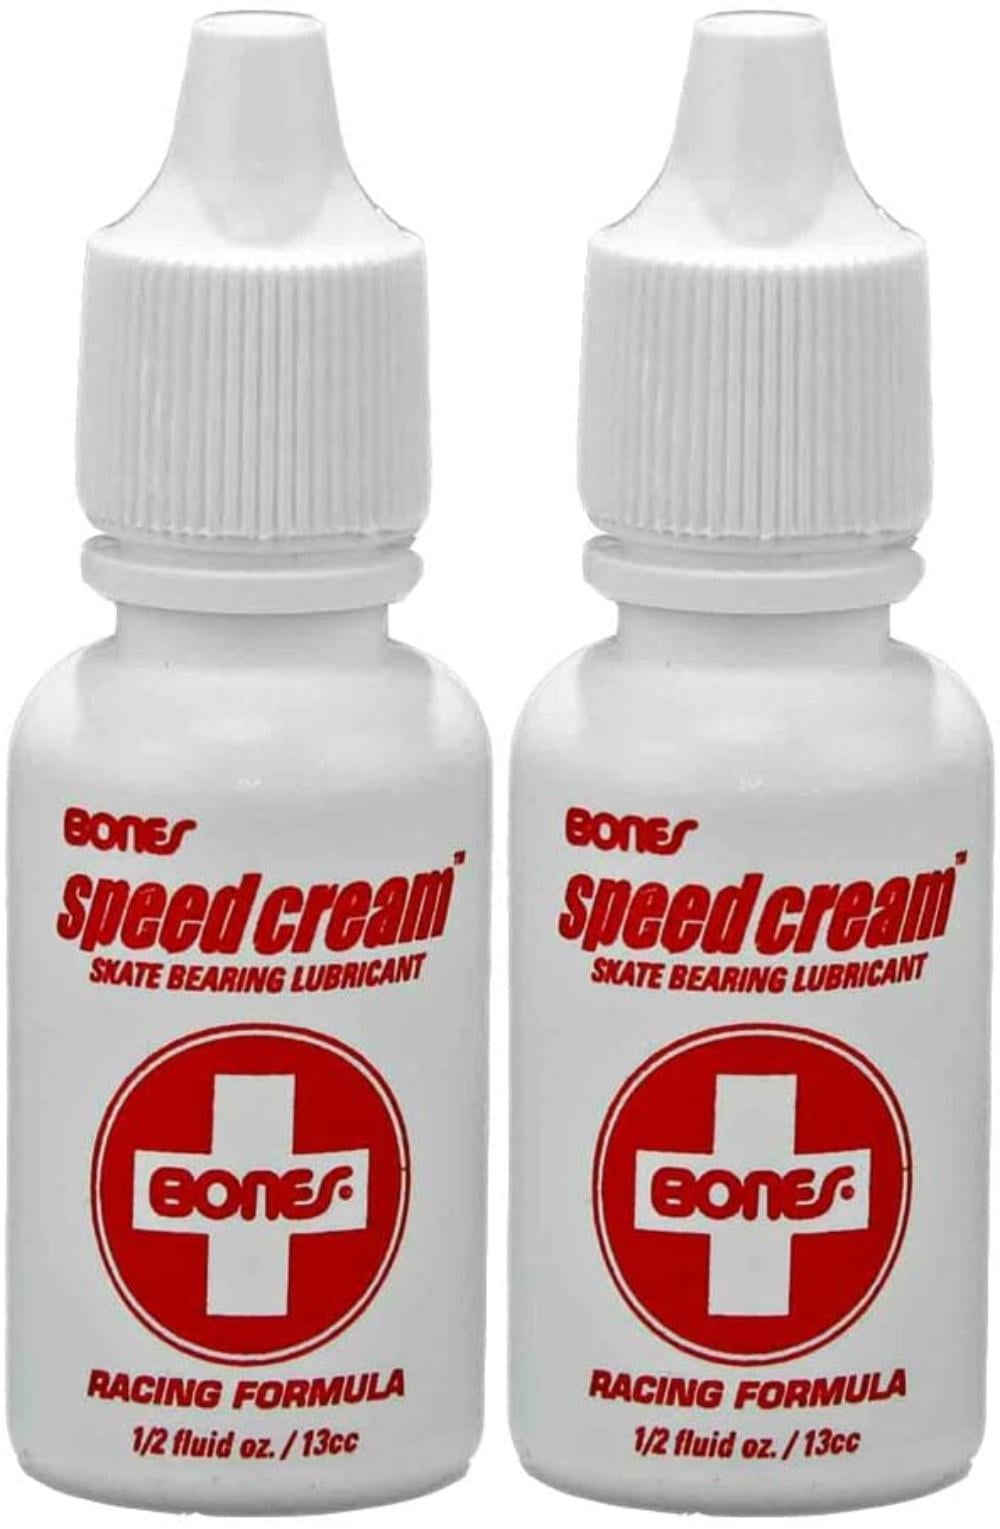 Bones Speed Cream Skate Bearing Lubricant